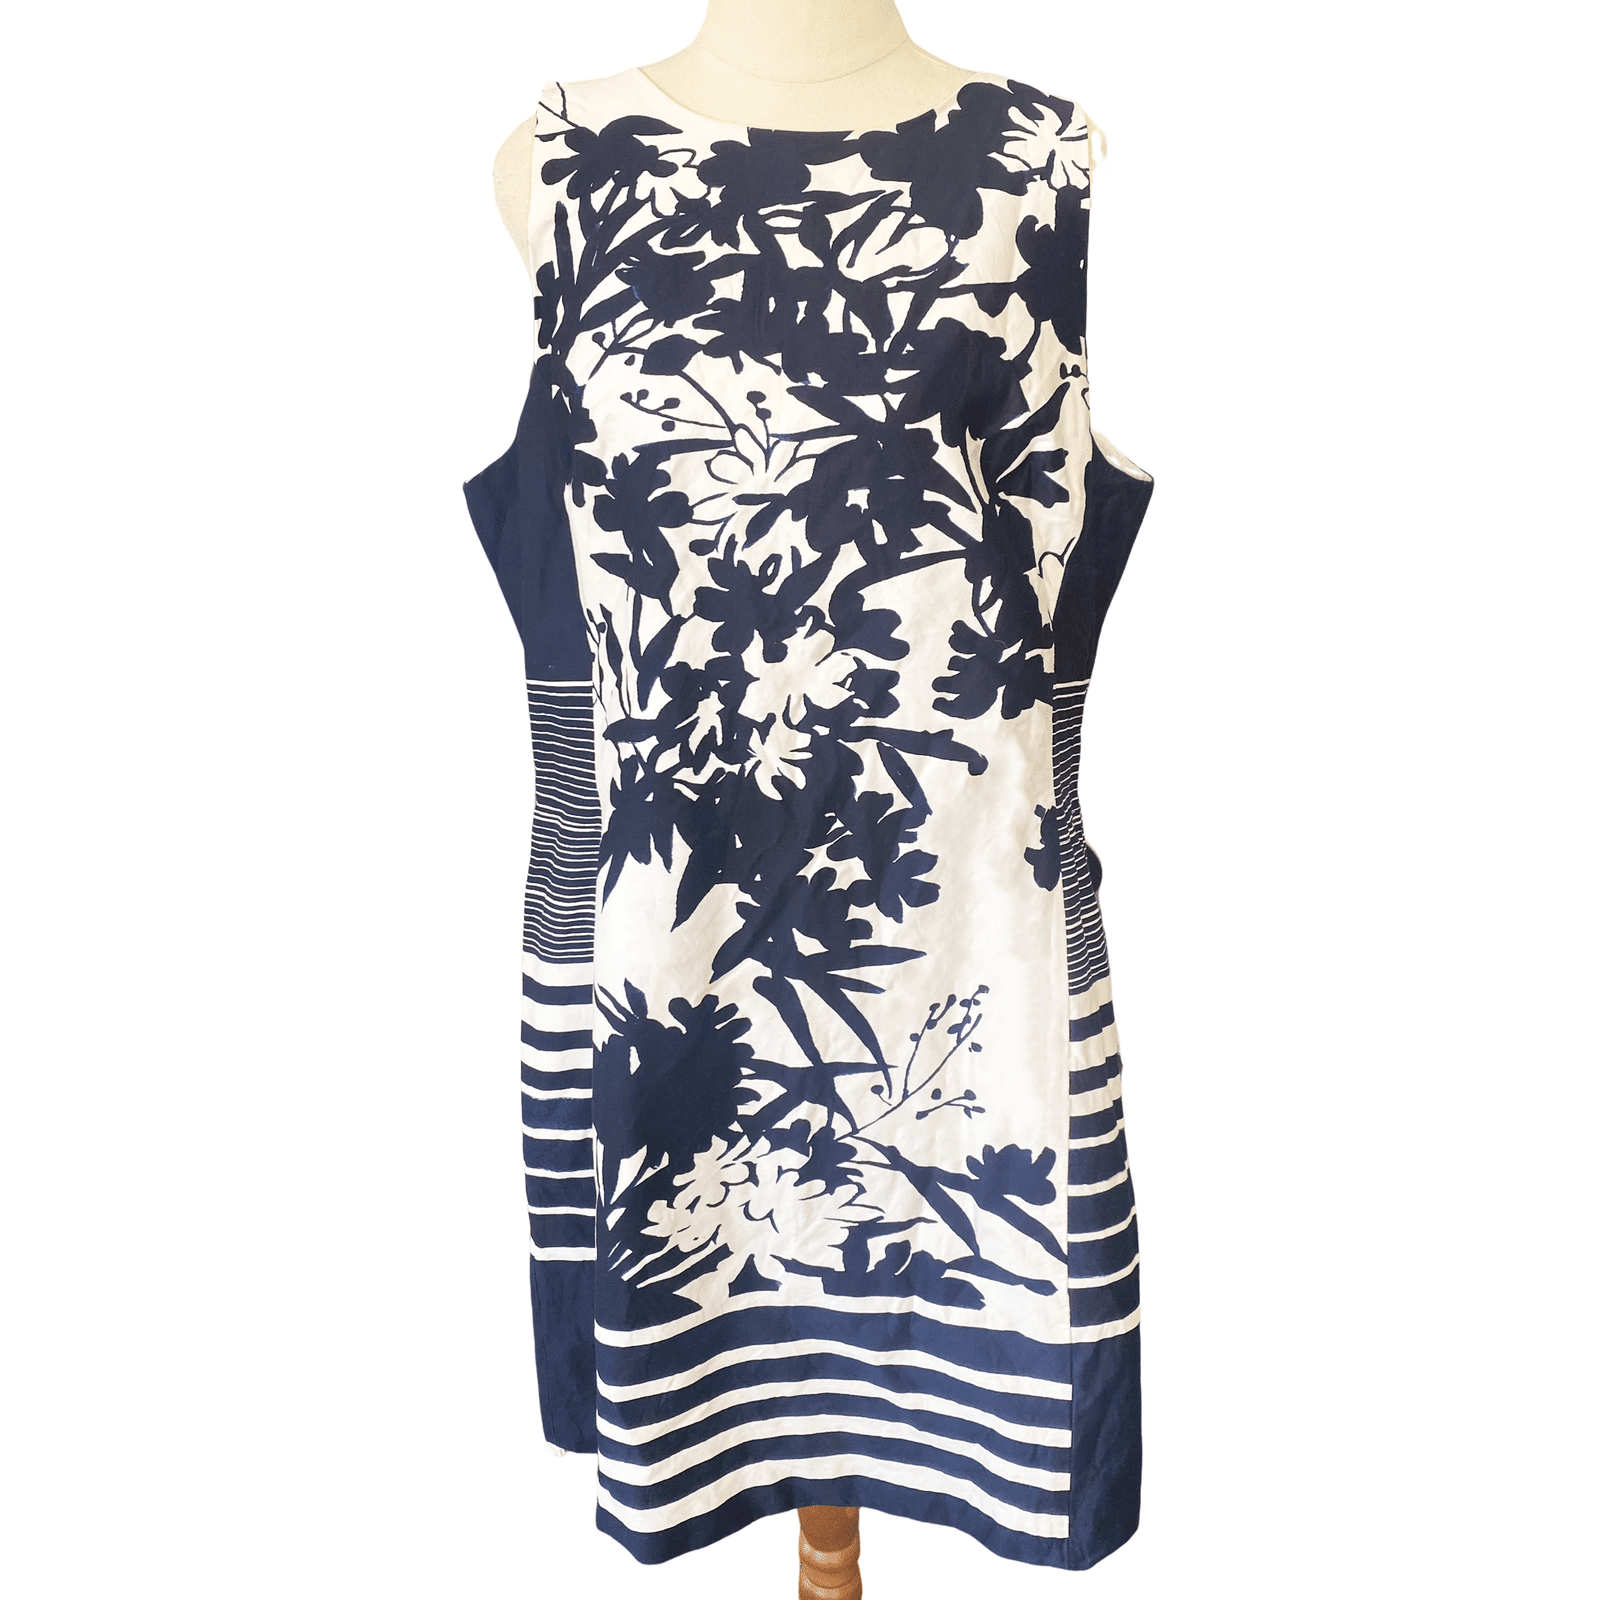 Ralph Lauren navy and white print dress | size 12-14